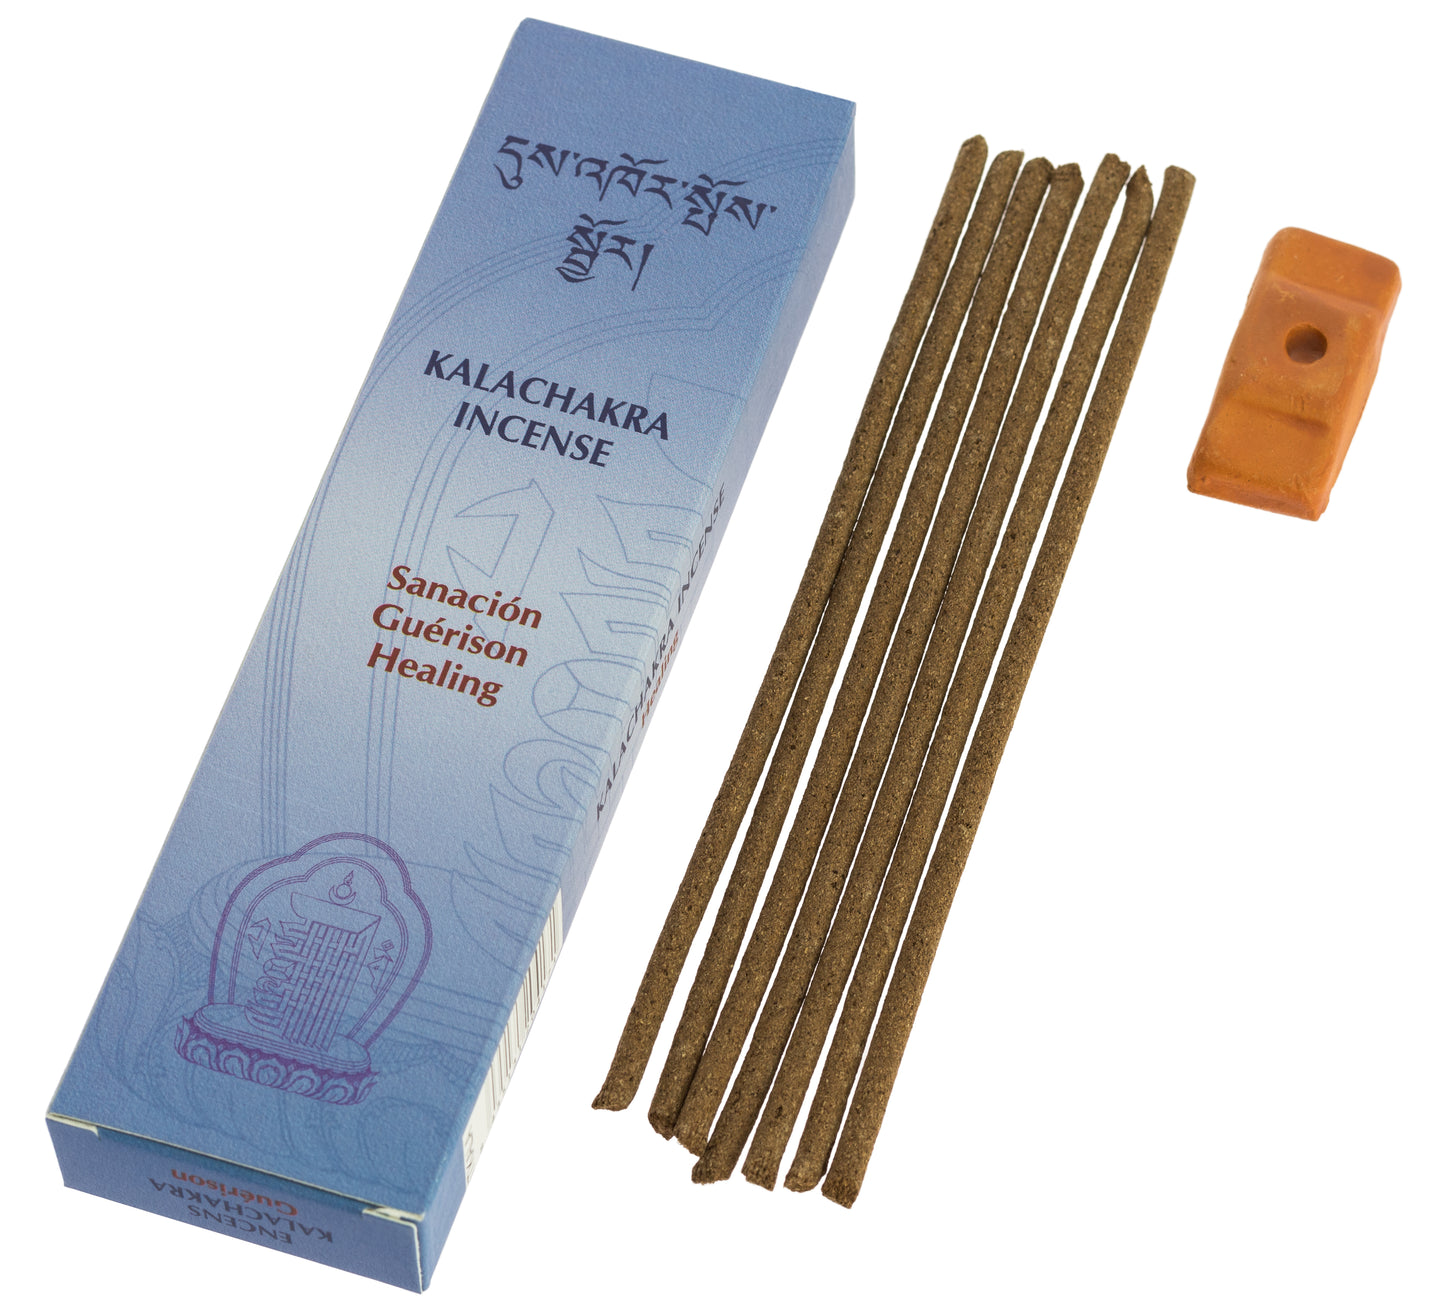 Tibetan incense Kalachakra - Healing